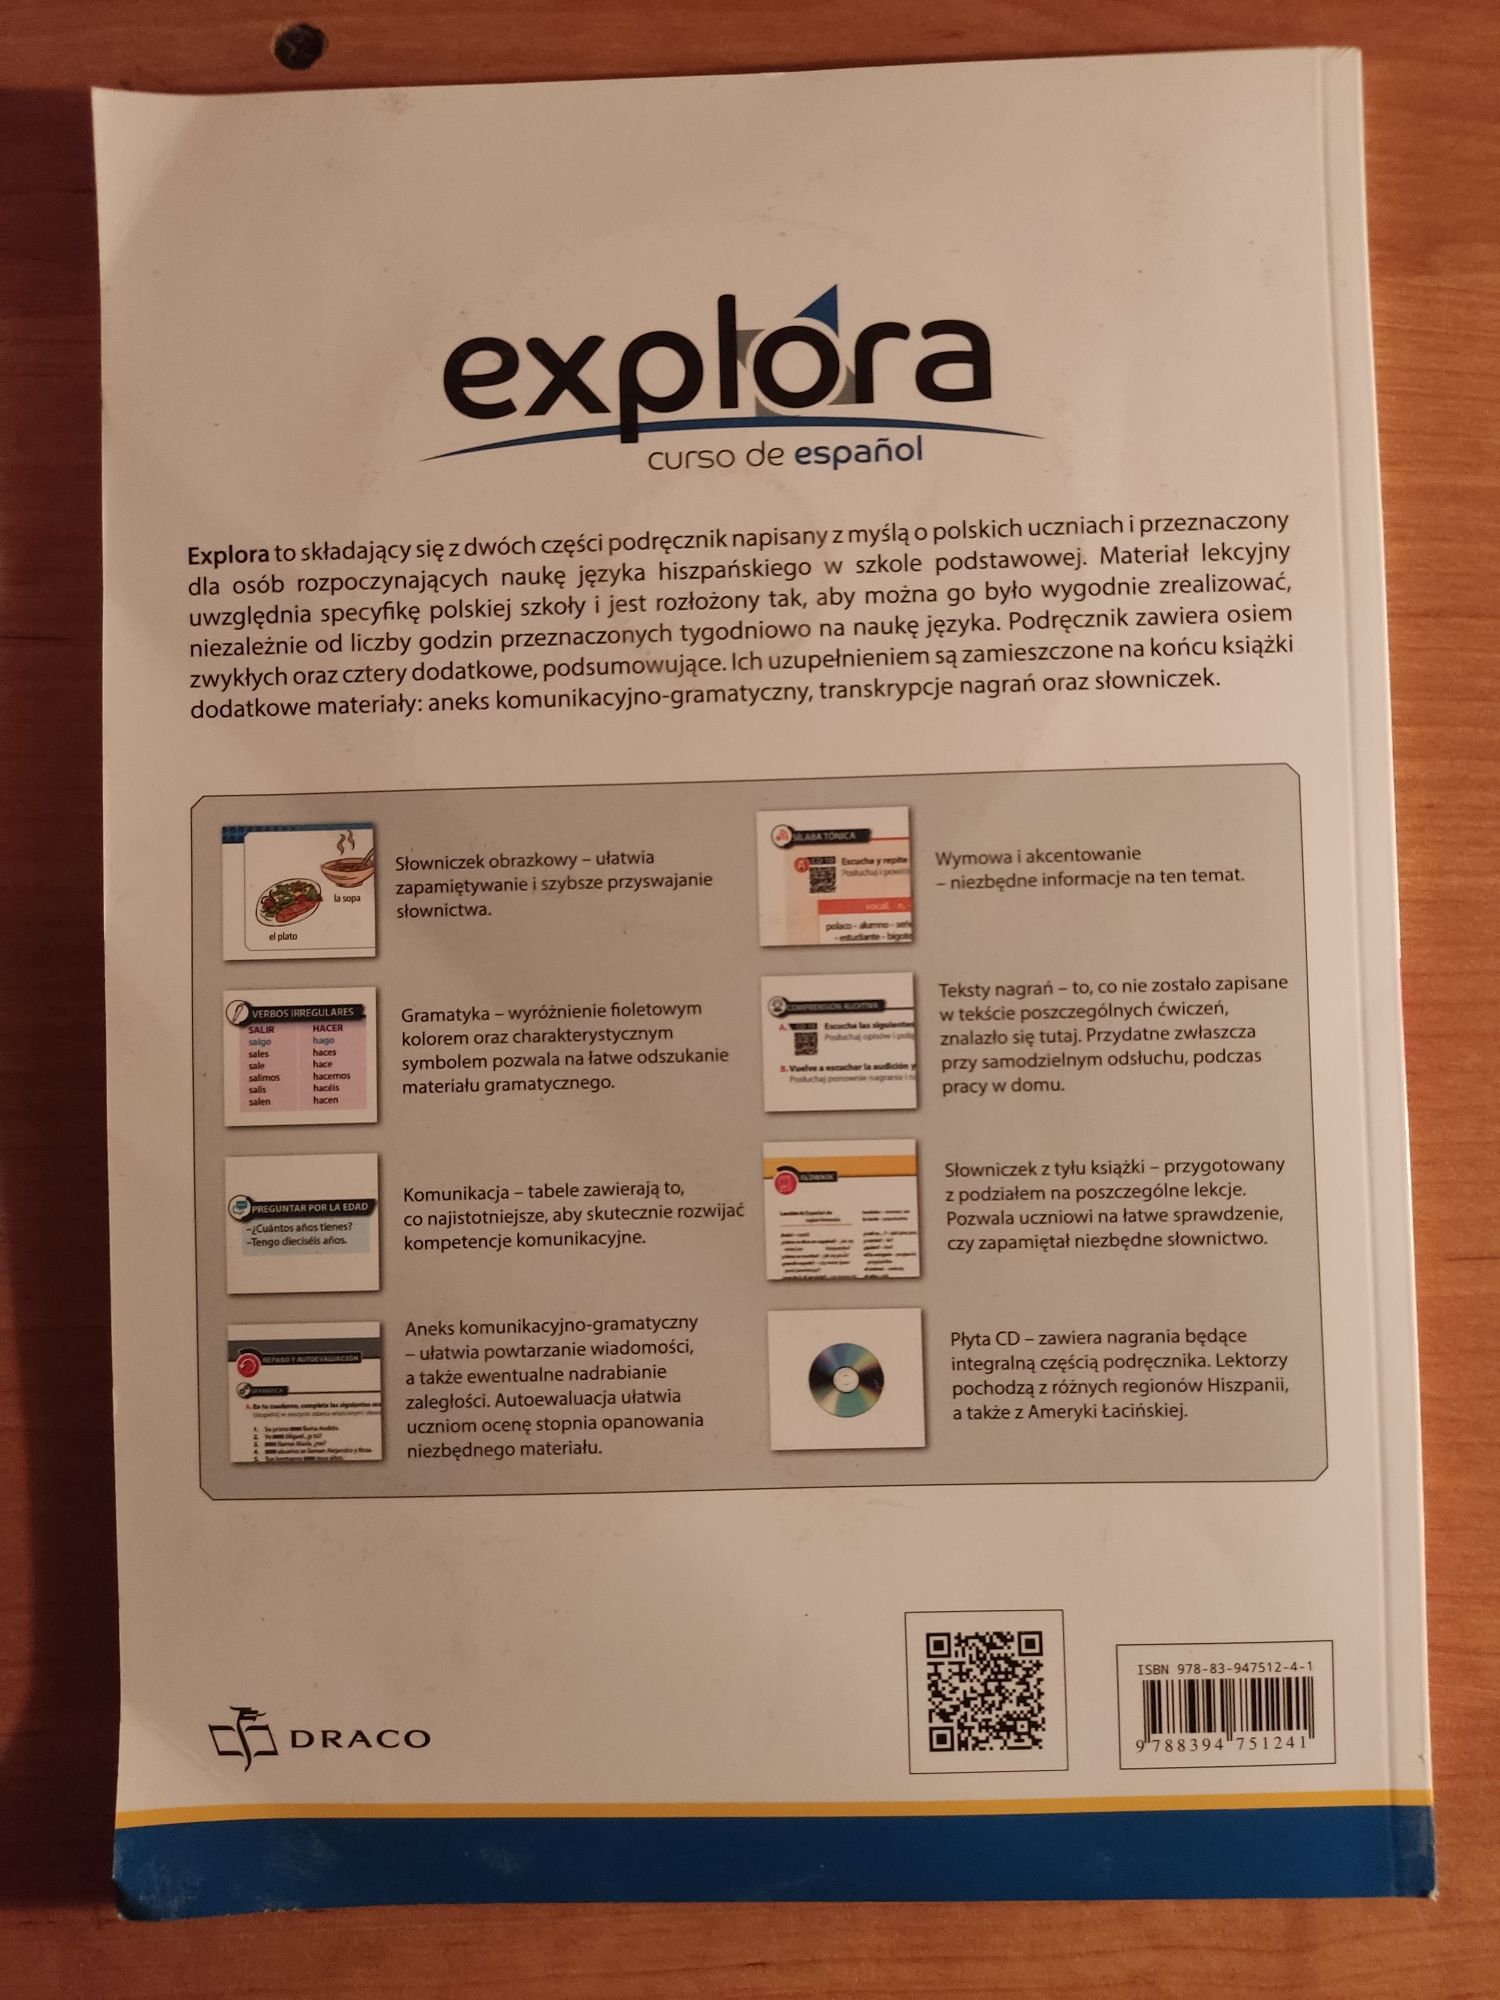 Podręcznik Hiszpański Explorq Cyrse dr espanol Draco